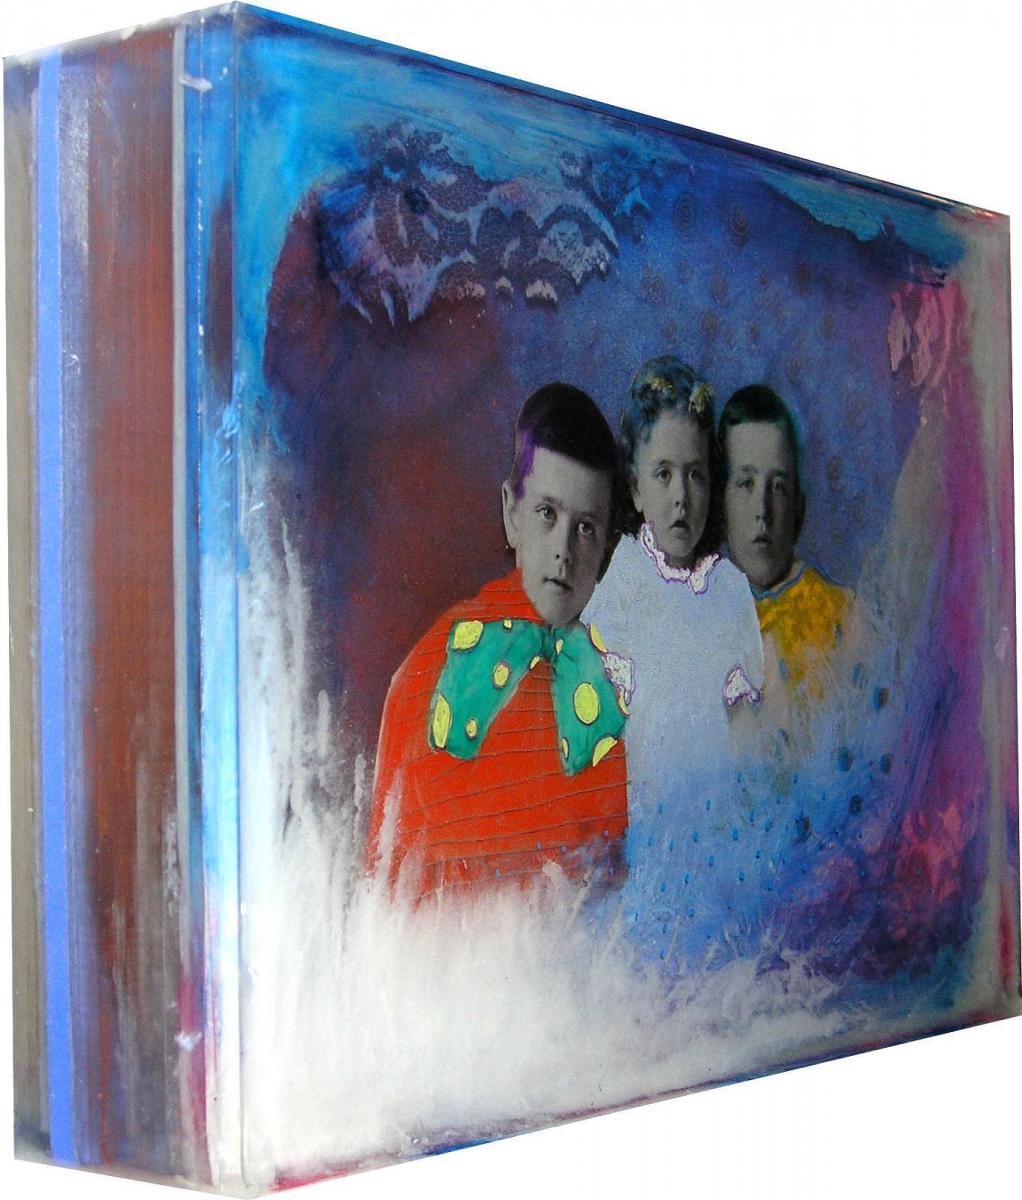 resin box by Matt Kane - “Stolen Children” - detail 2